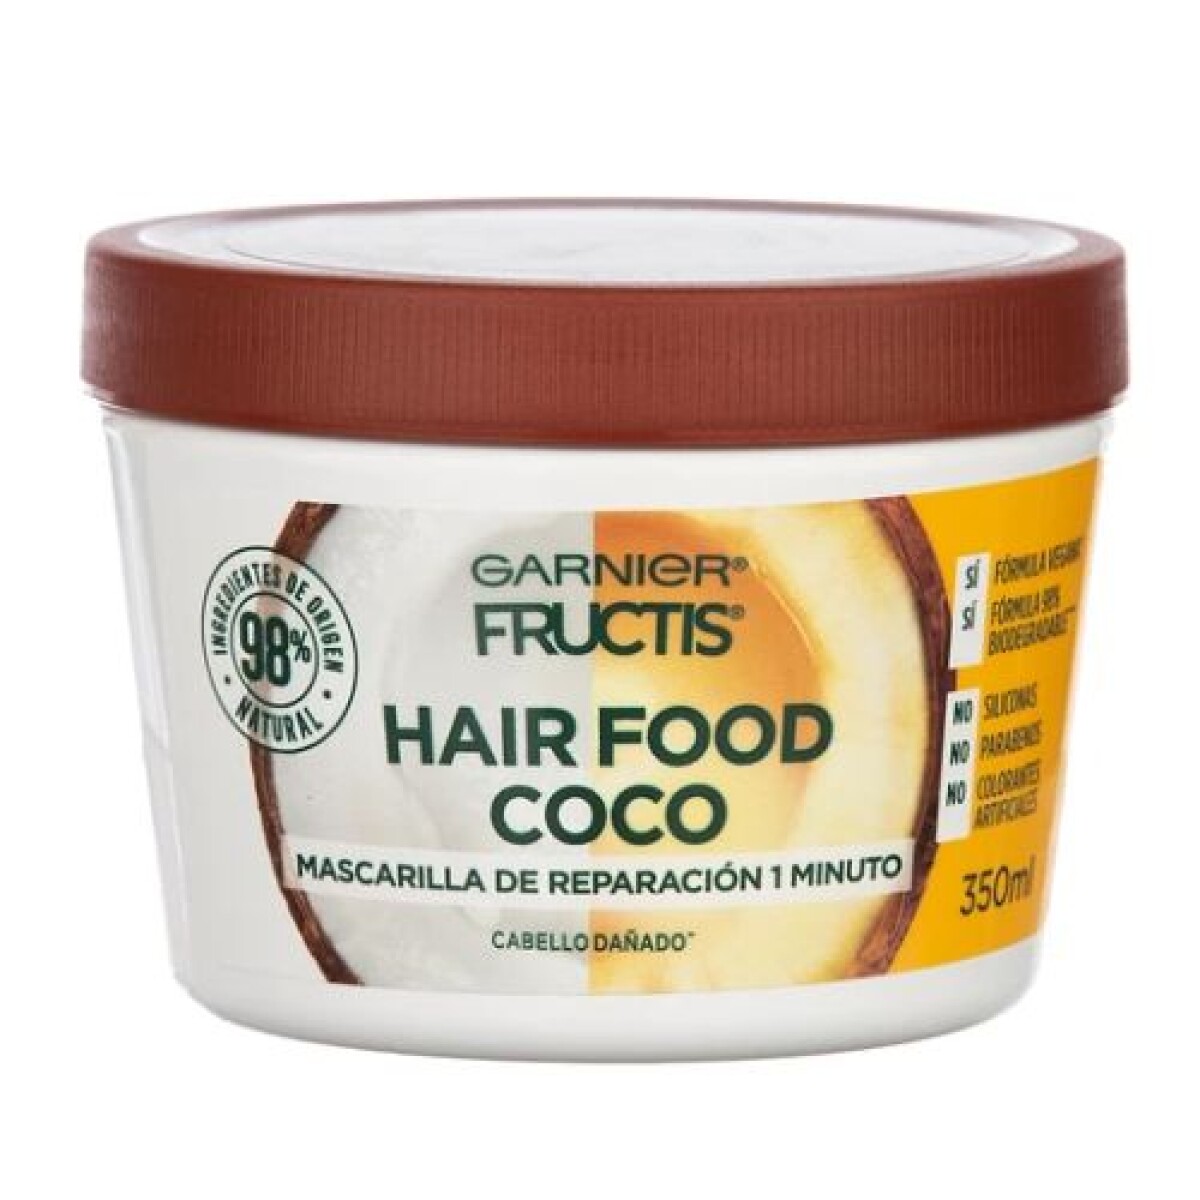 Tratamiento Mascarilla Garnier Hair Food Coco 350 Ml - 001 